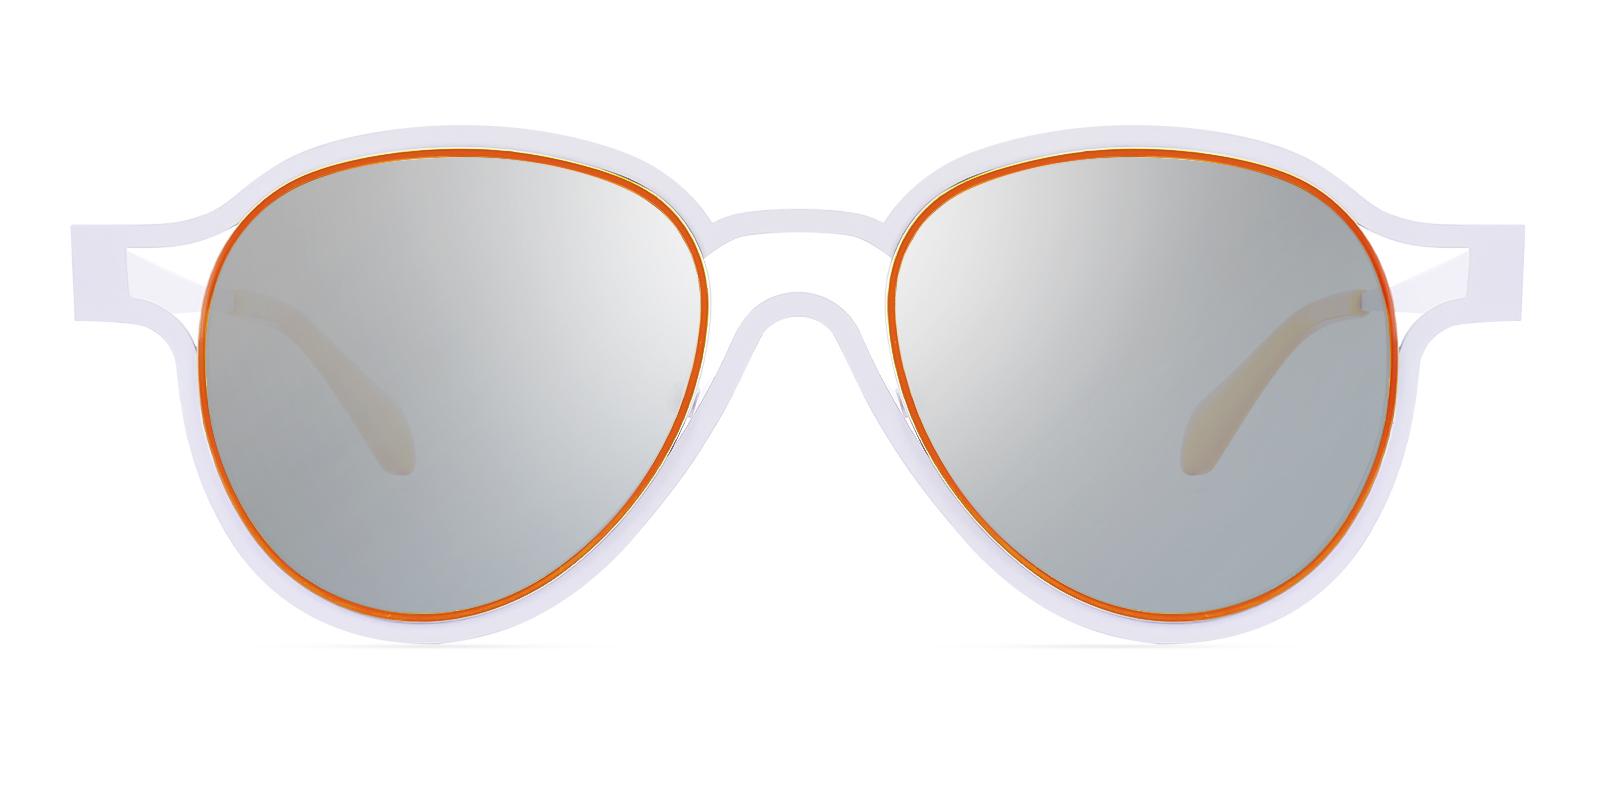 Phano White Metal NosePads , Sunglasses Frames from ABBE Glasses